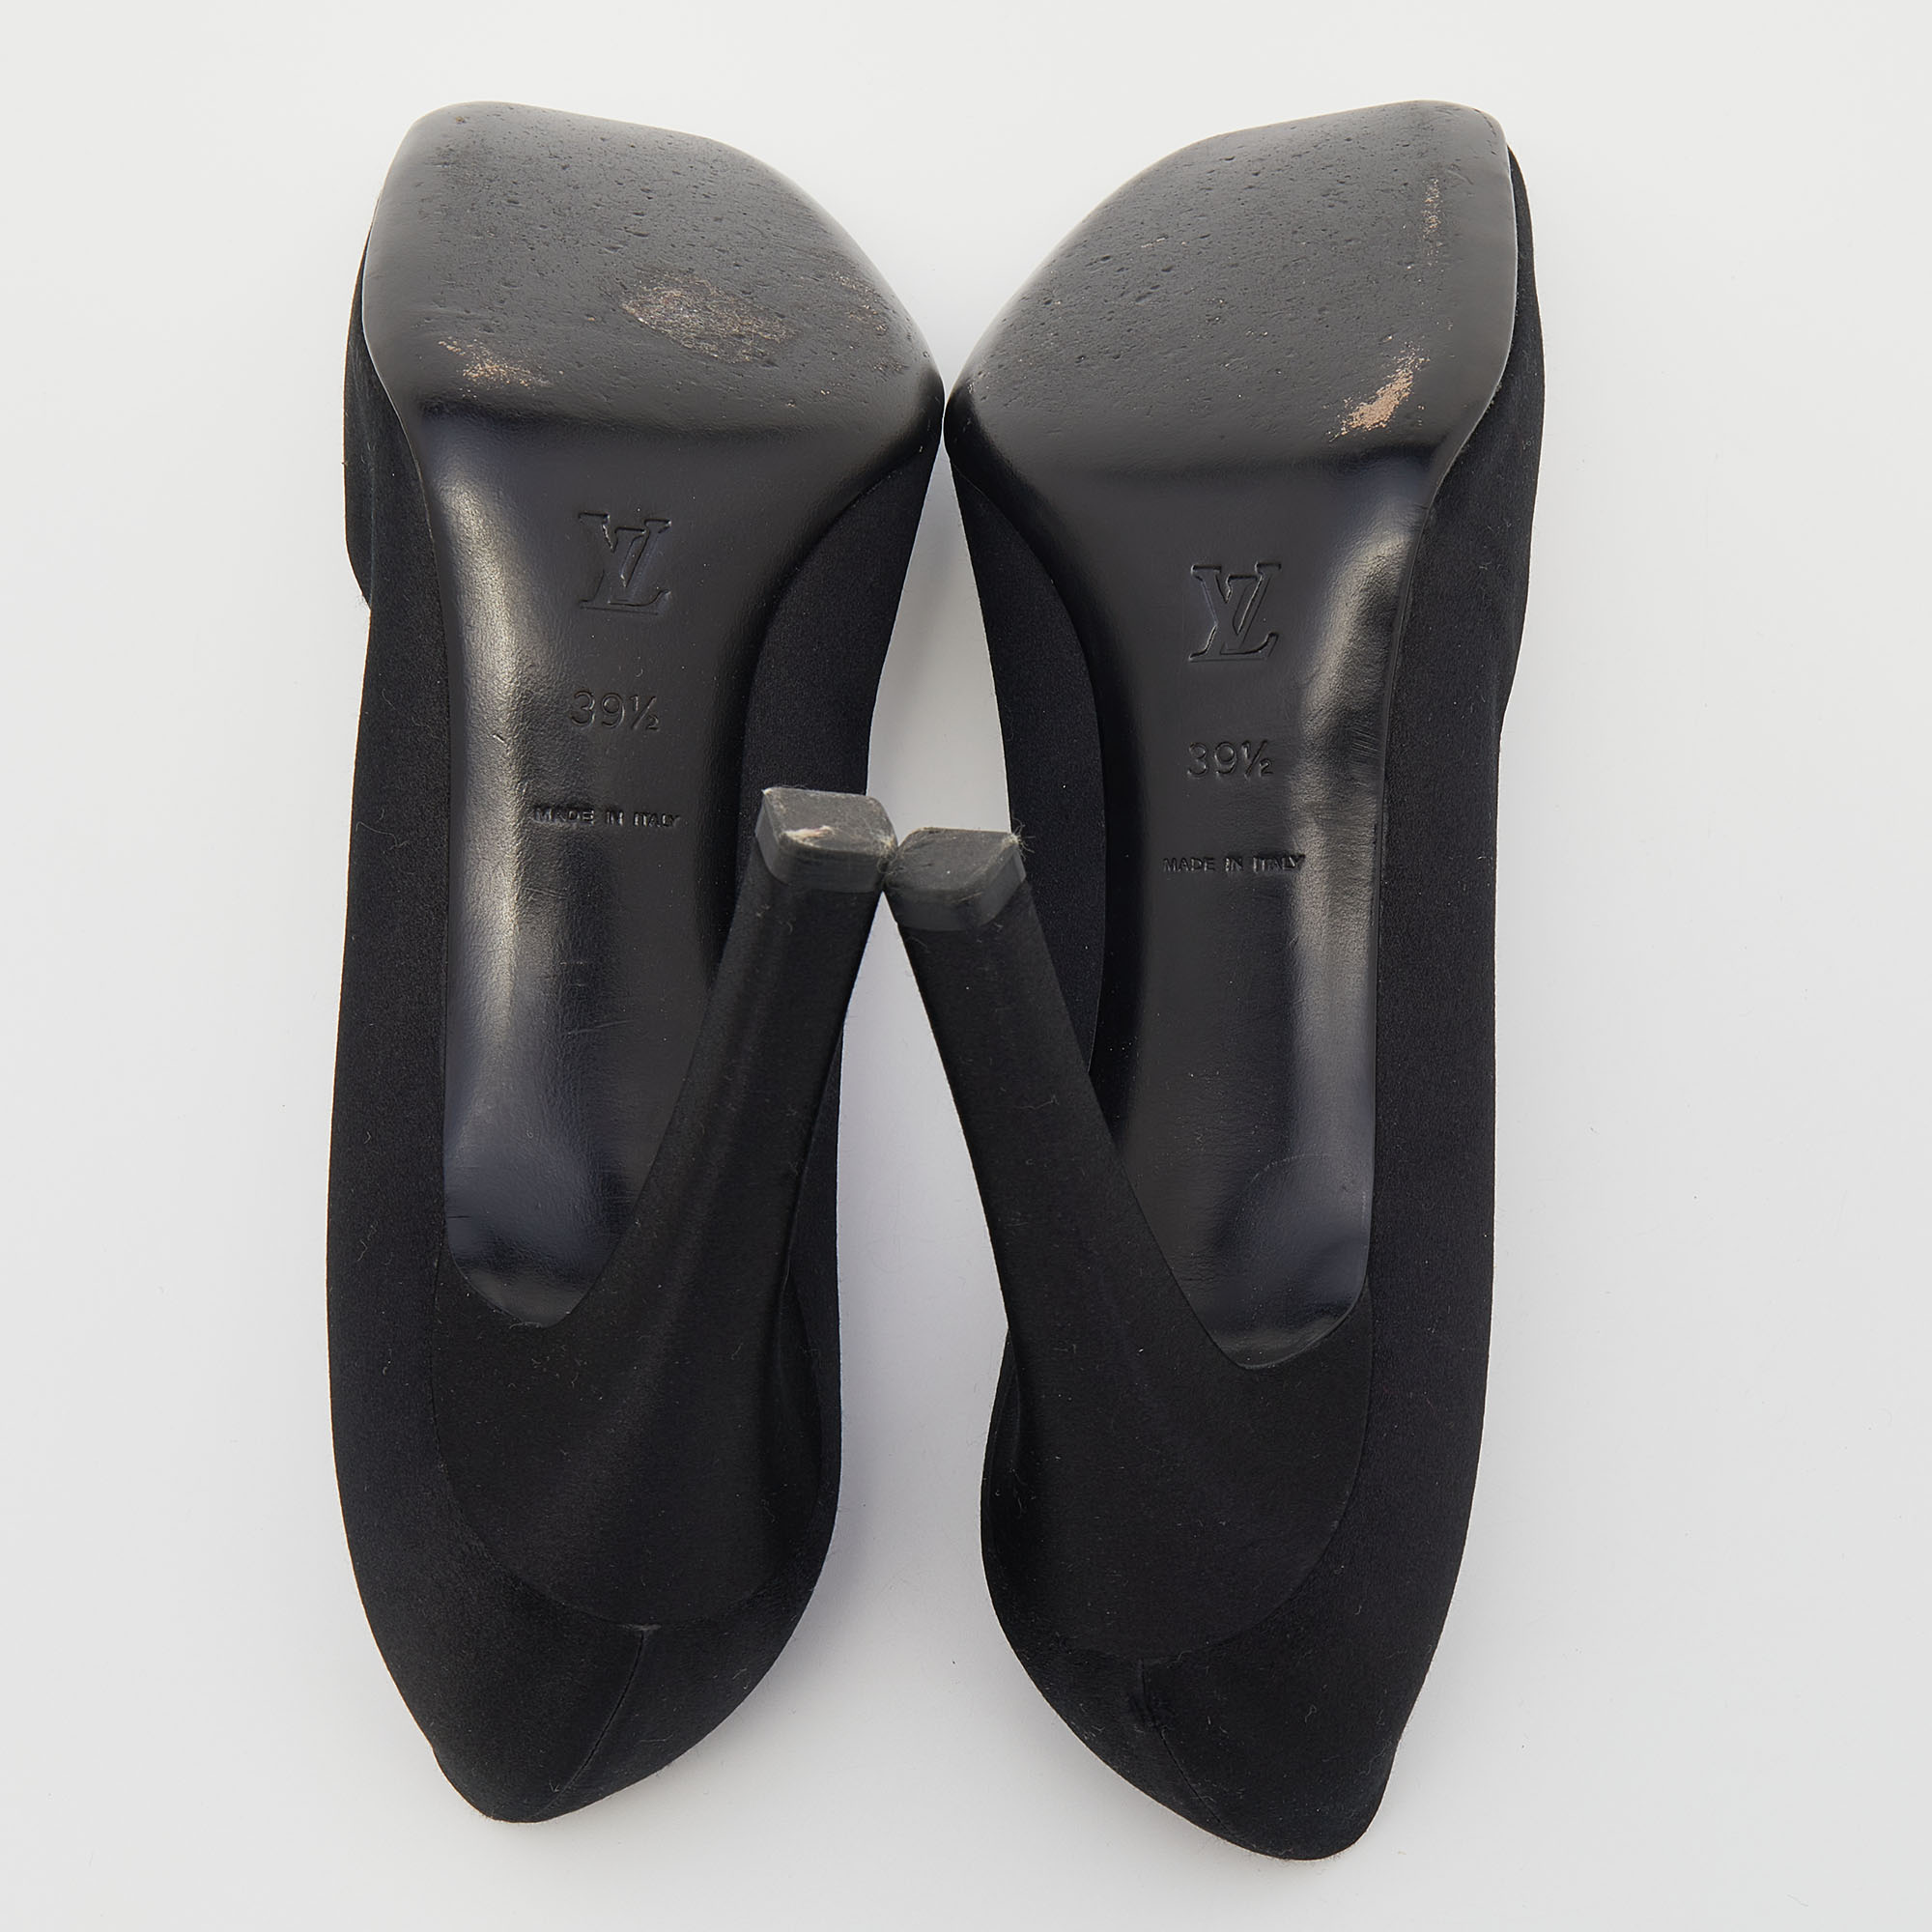 Louis Vuitton Black Satin Crystal Embellished Square Toe Pumps Size 39.5